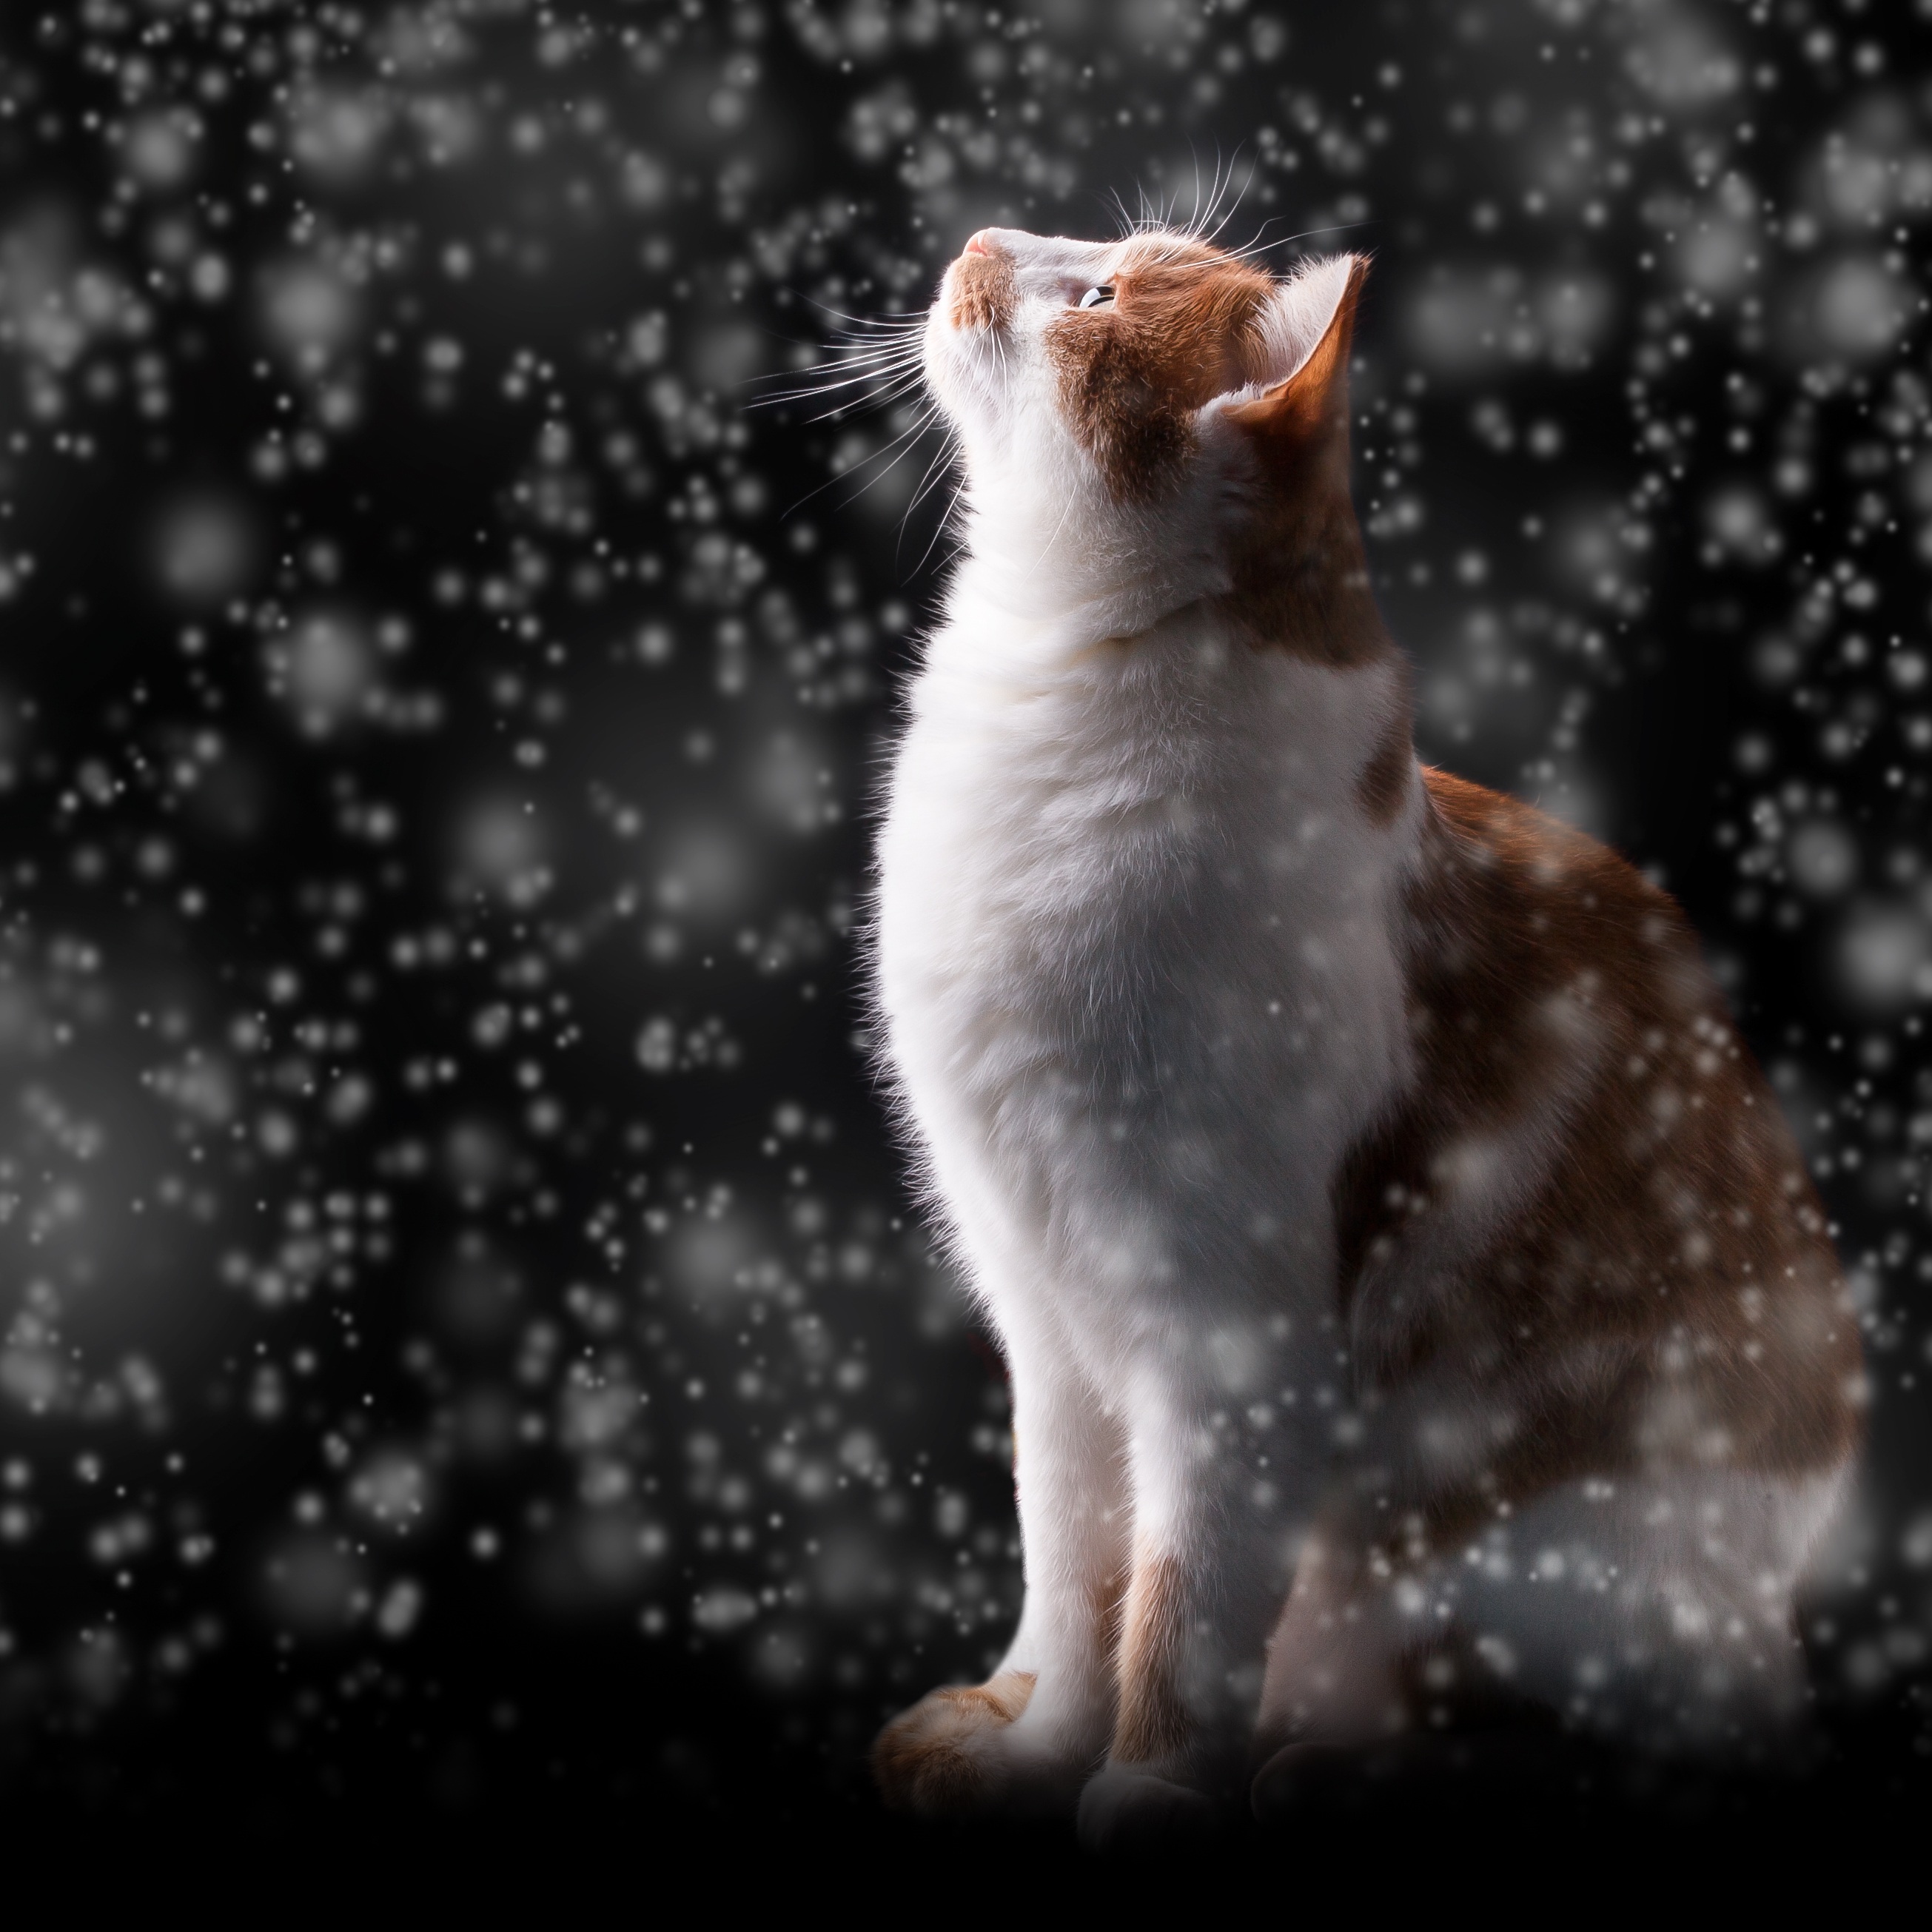 snowfall, photoshop, boquet, cat, animals, snow, glare, bokeh